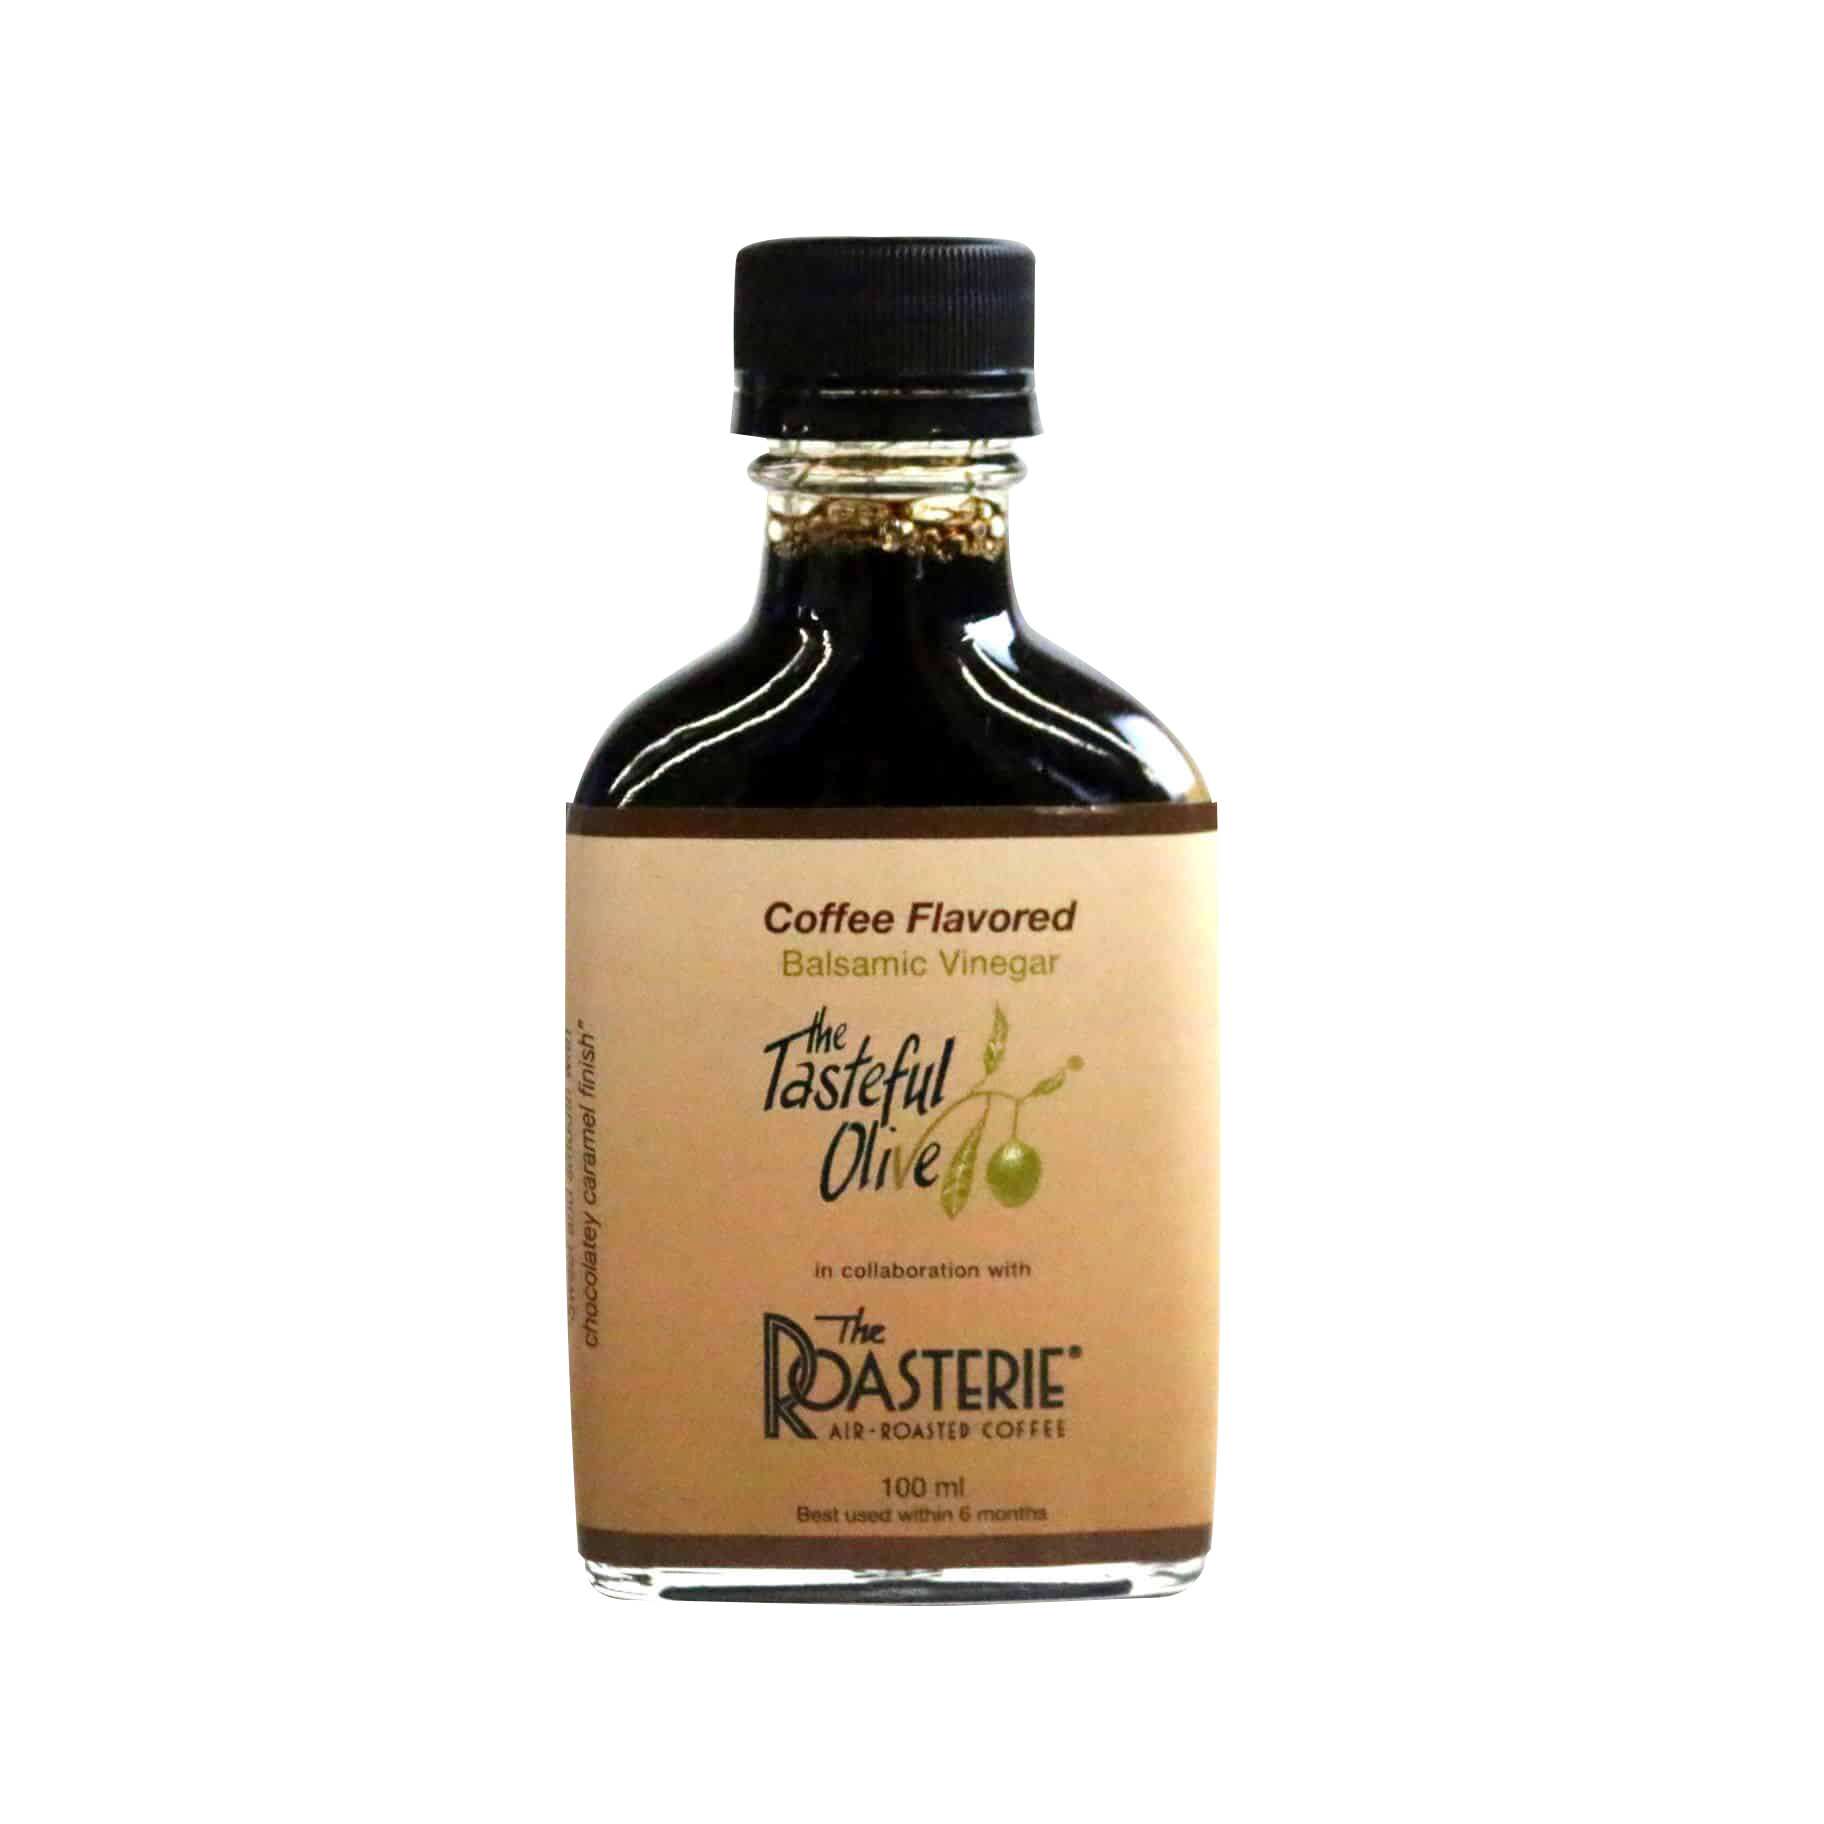 Coffee Flavored Balsamic Vinegar